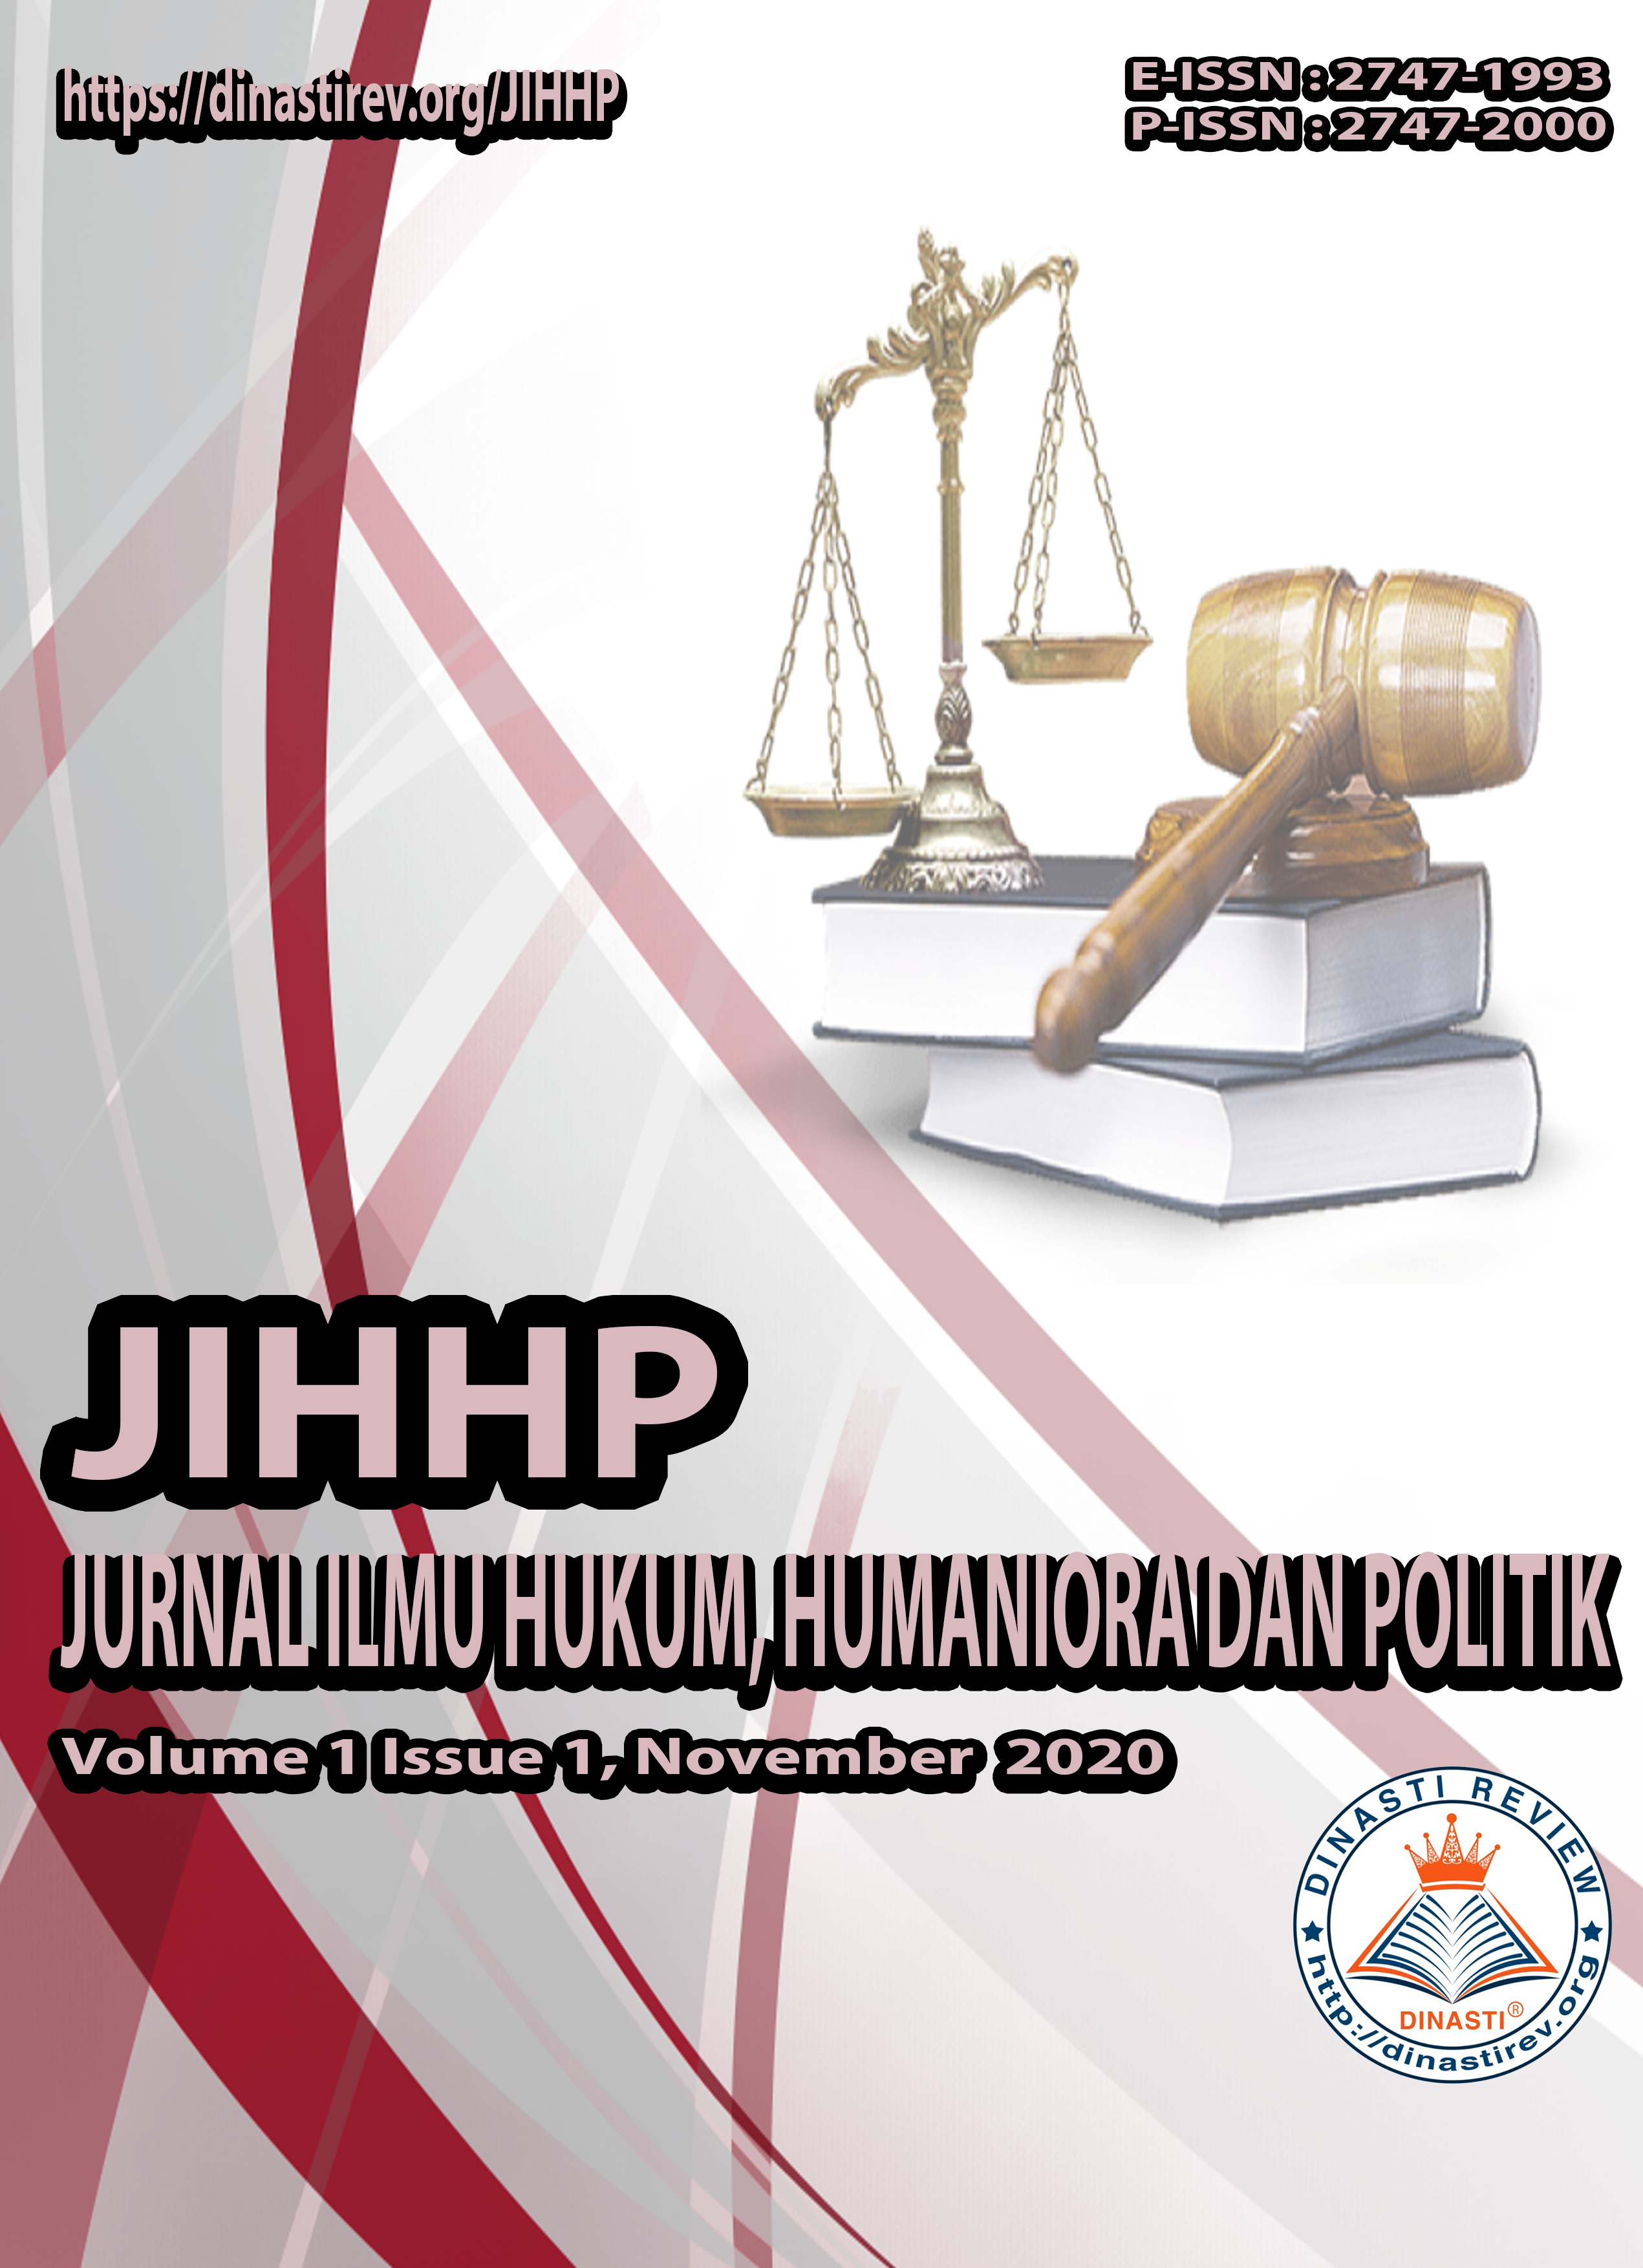 					View Vol. 1 No. 1 (2020): (JIHHP) Jurnal Ilmu Hukum, Humaniora dan Politik (November 2020)
				